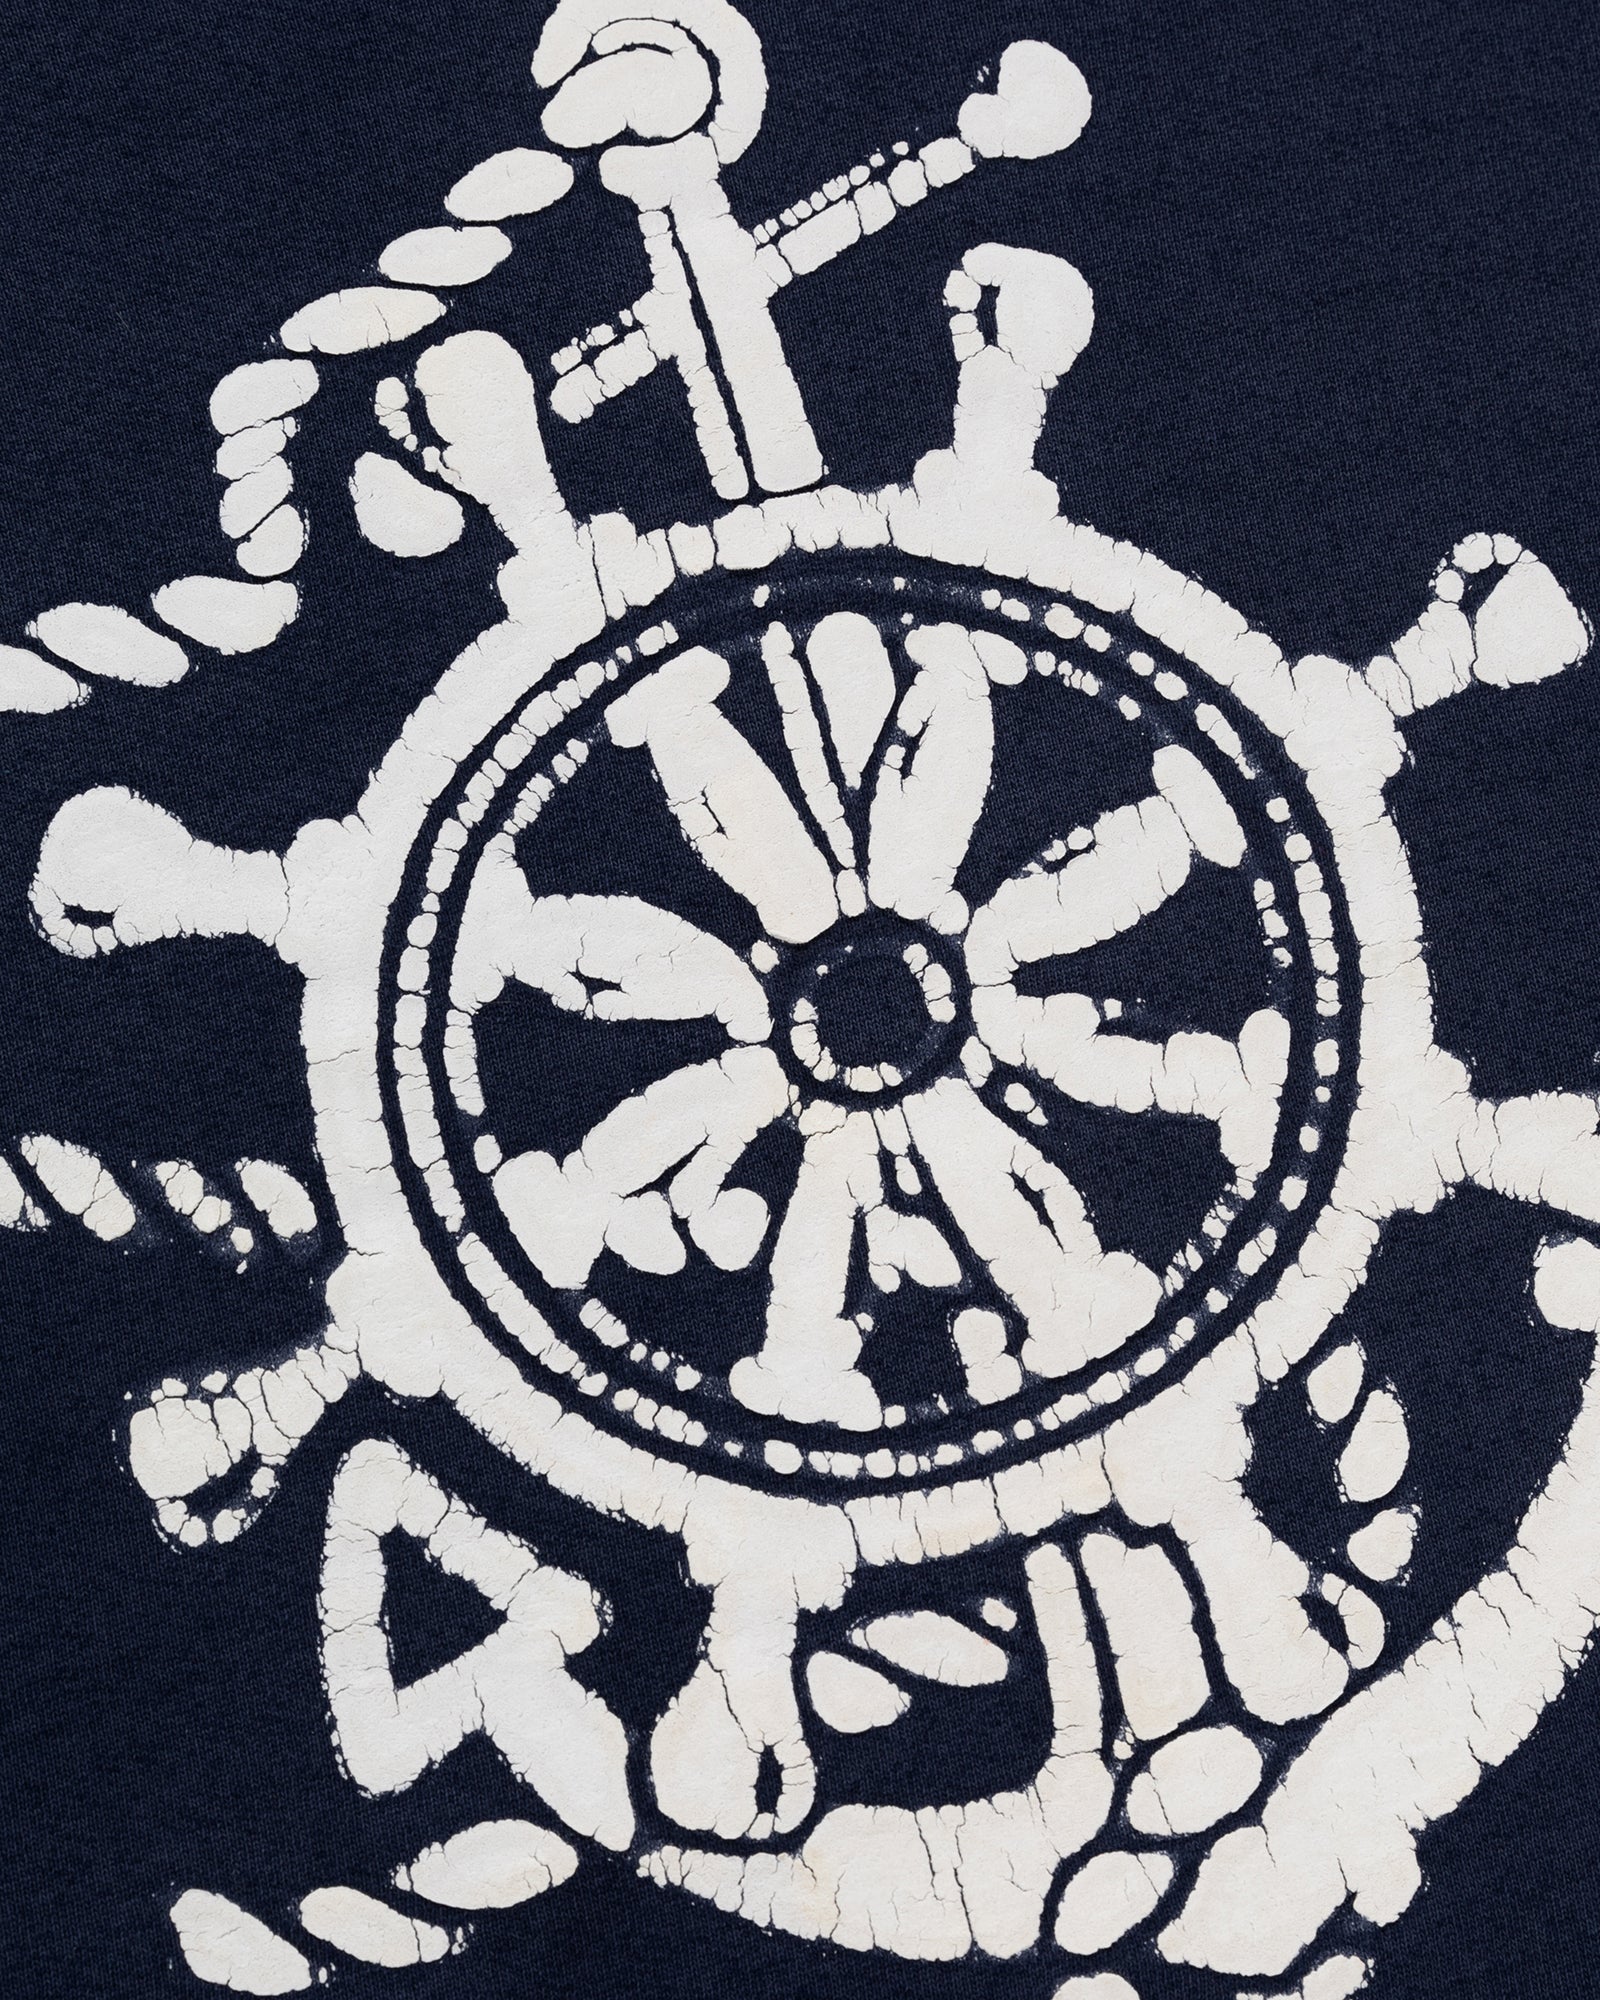 Vintage Gap Nautical Crewneck Sweatshirt